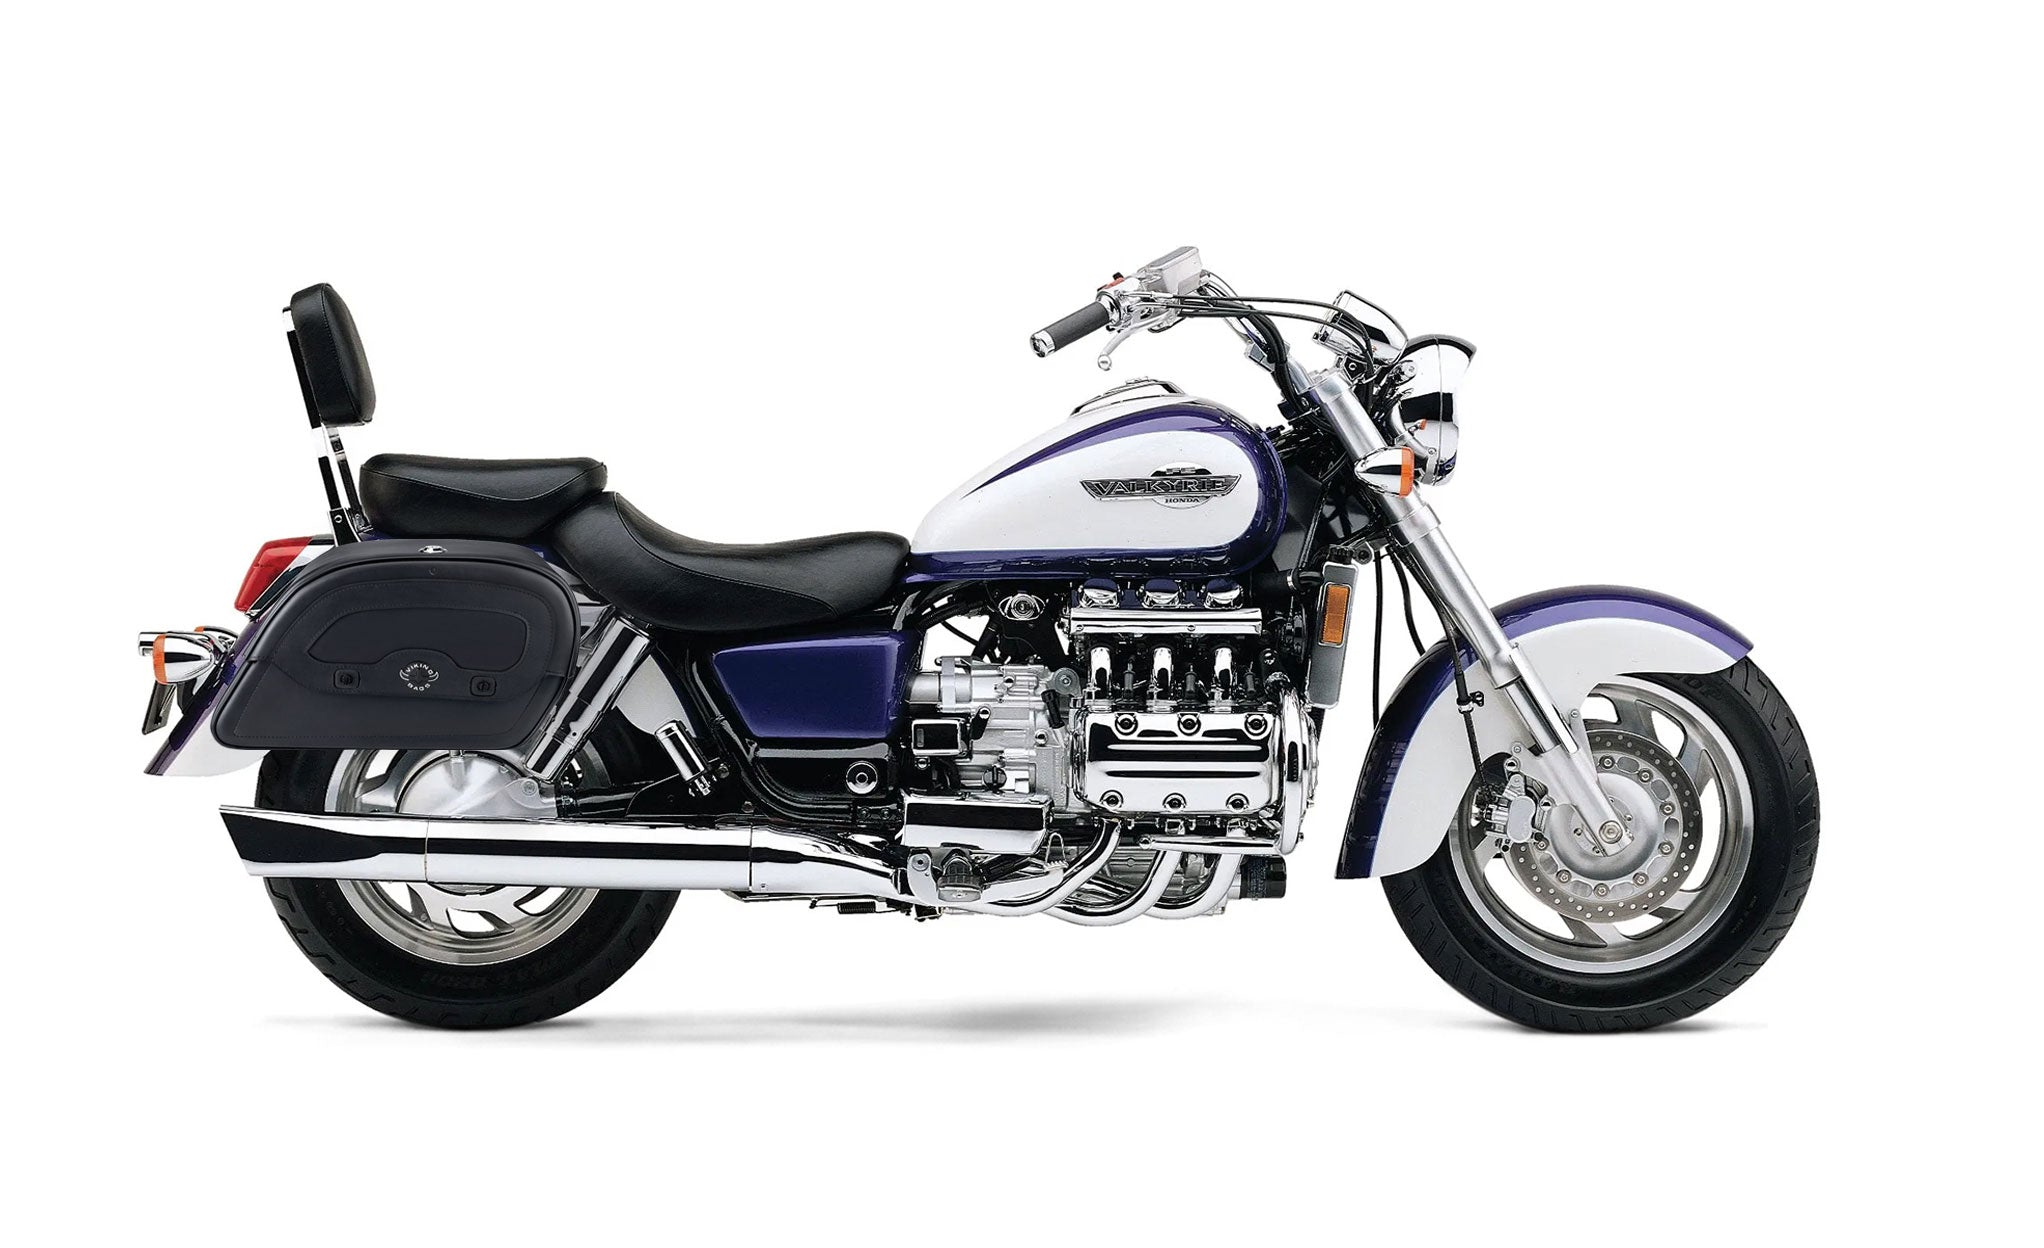 Viking Warrior Medium Honda 1500 Valkyrie Interstate Leather Motorcycle Saddlebags on Bike Photo @expand